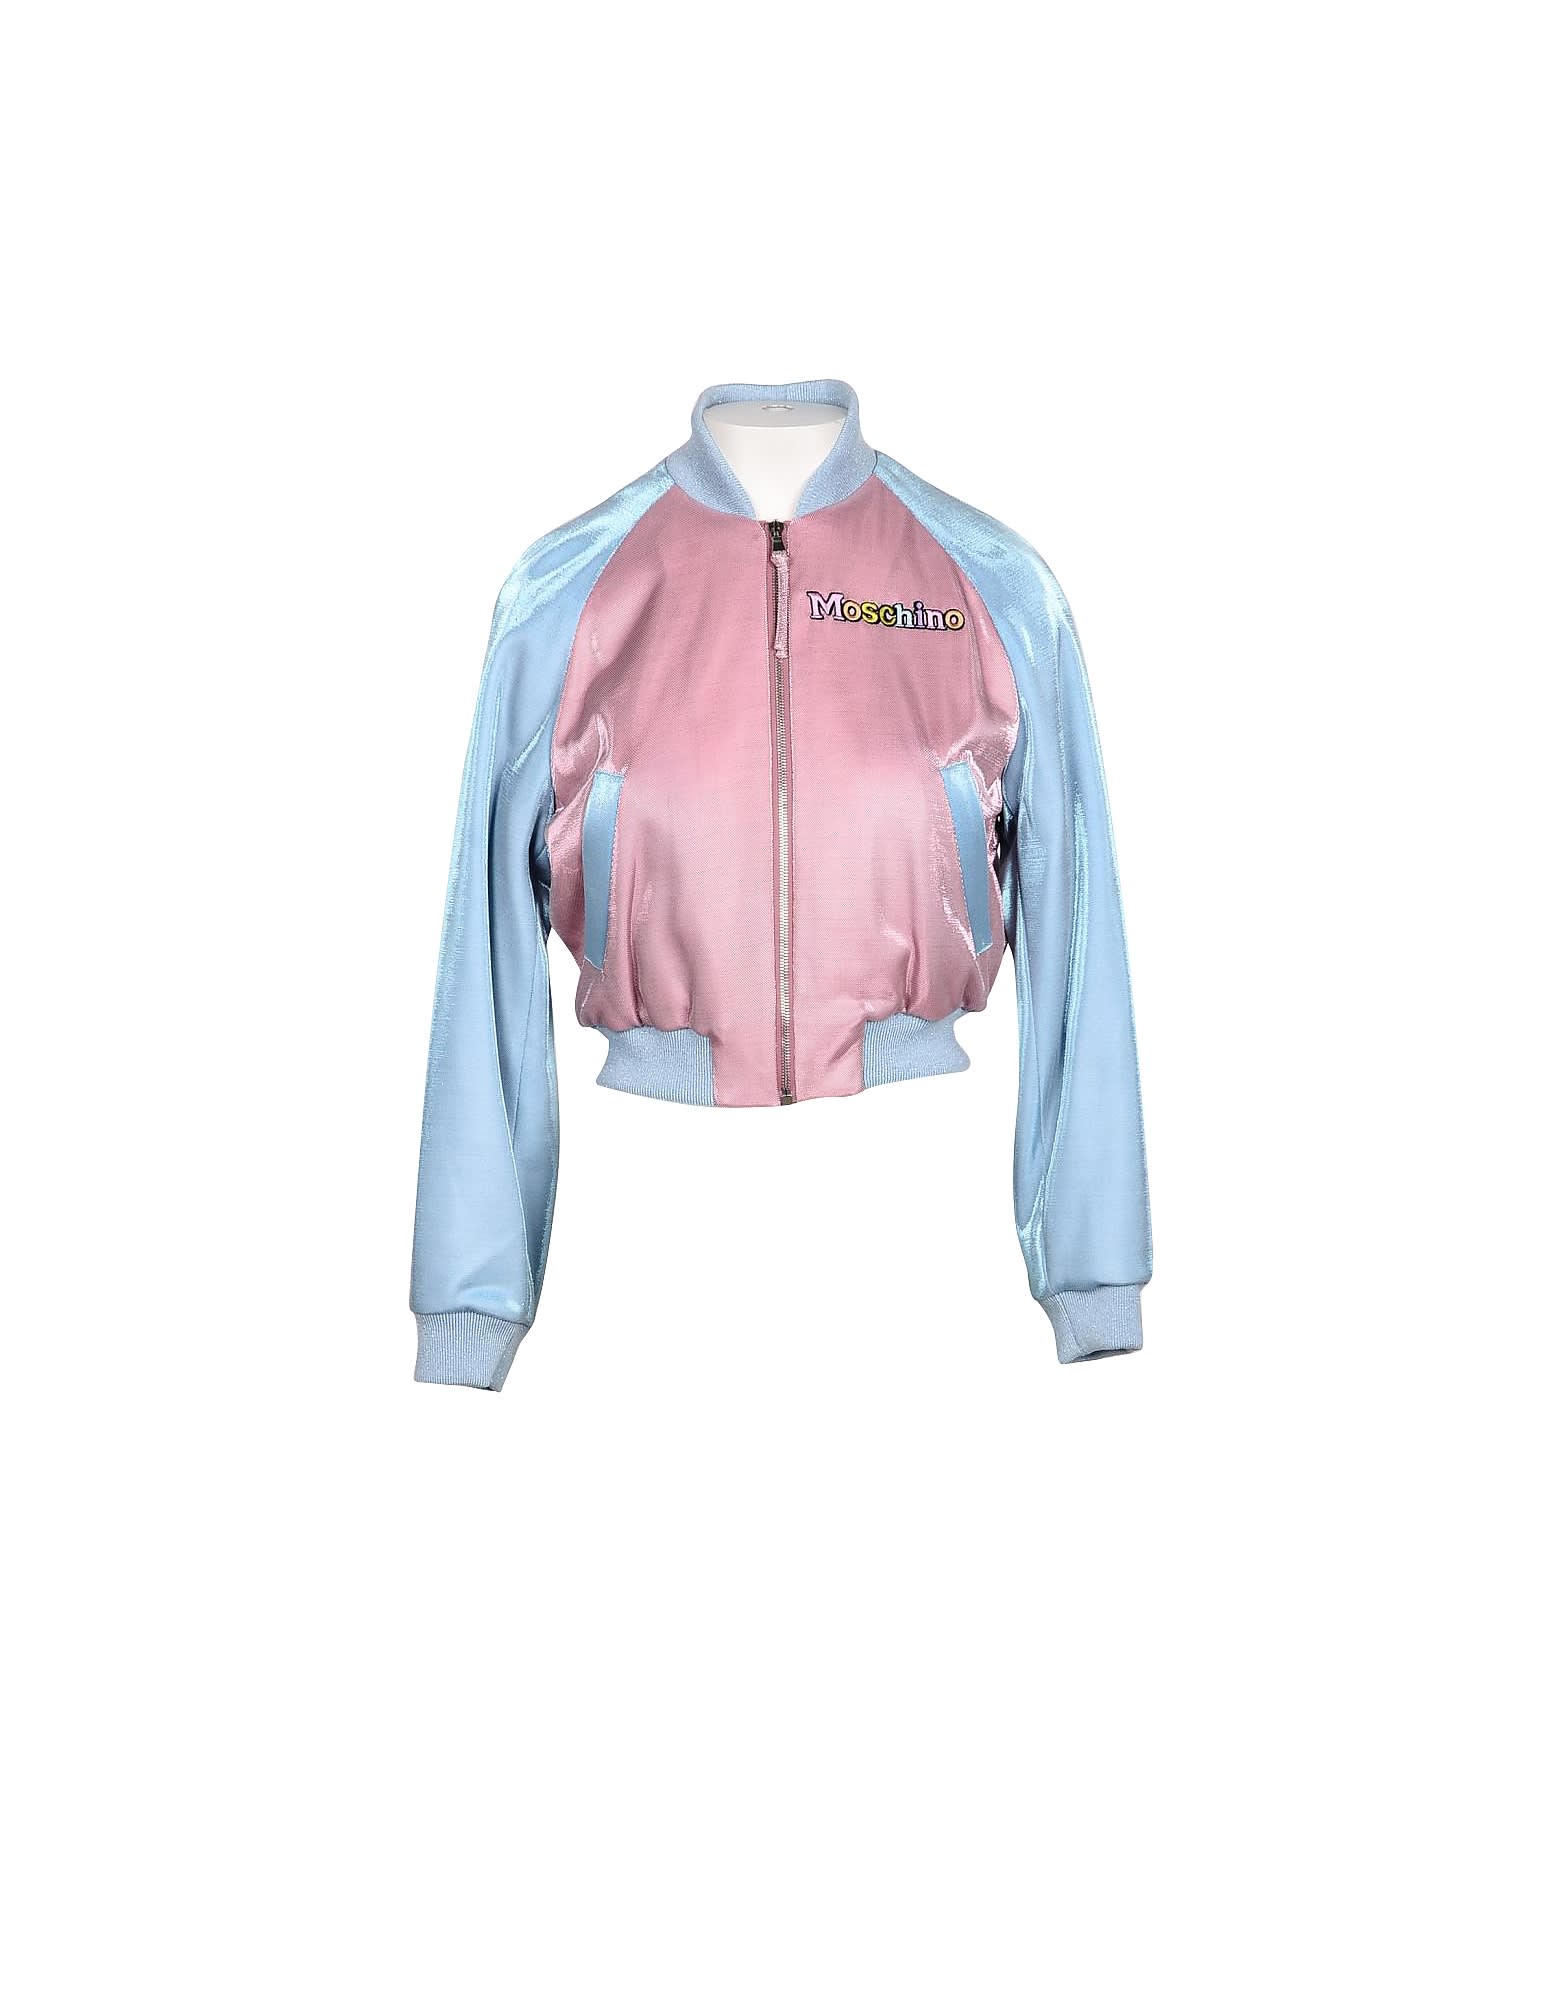 Moschino Womens Sky Blue Jacket